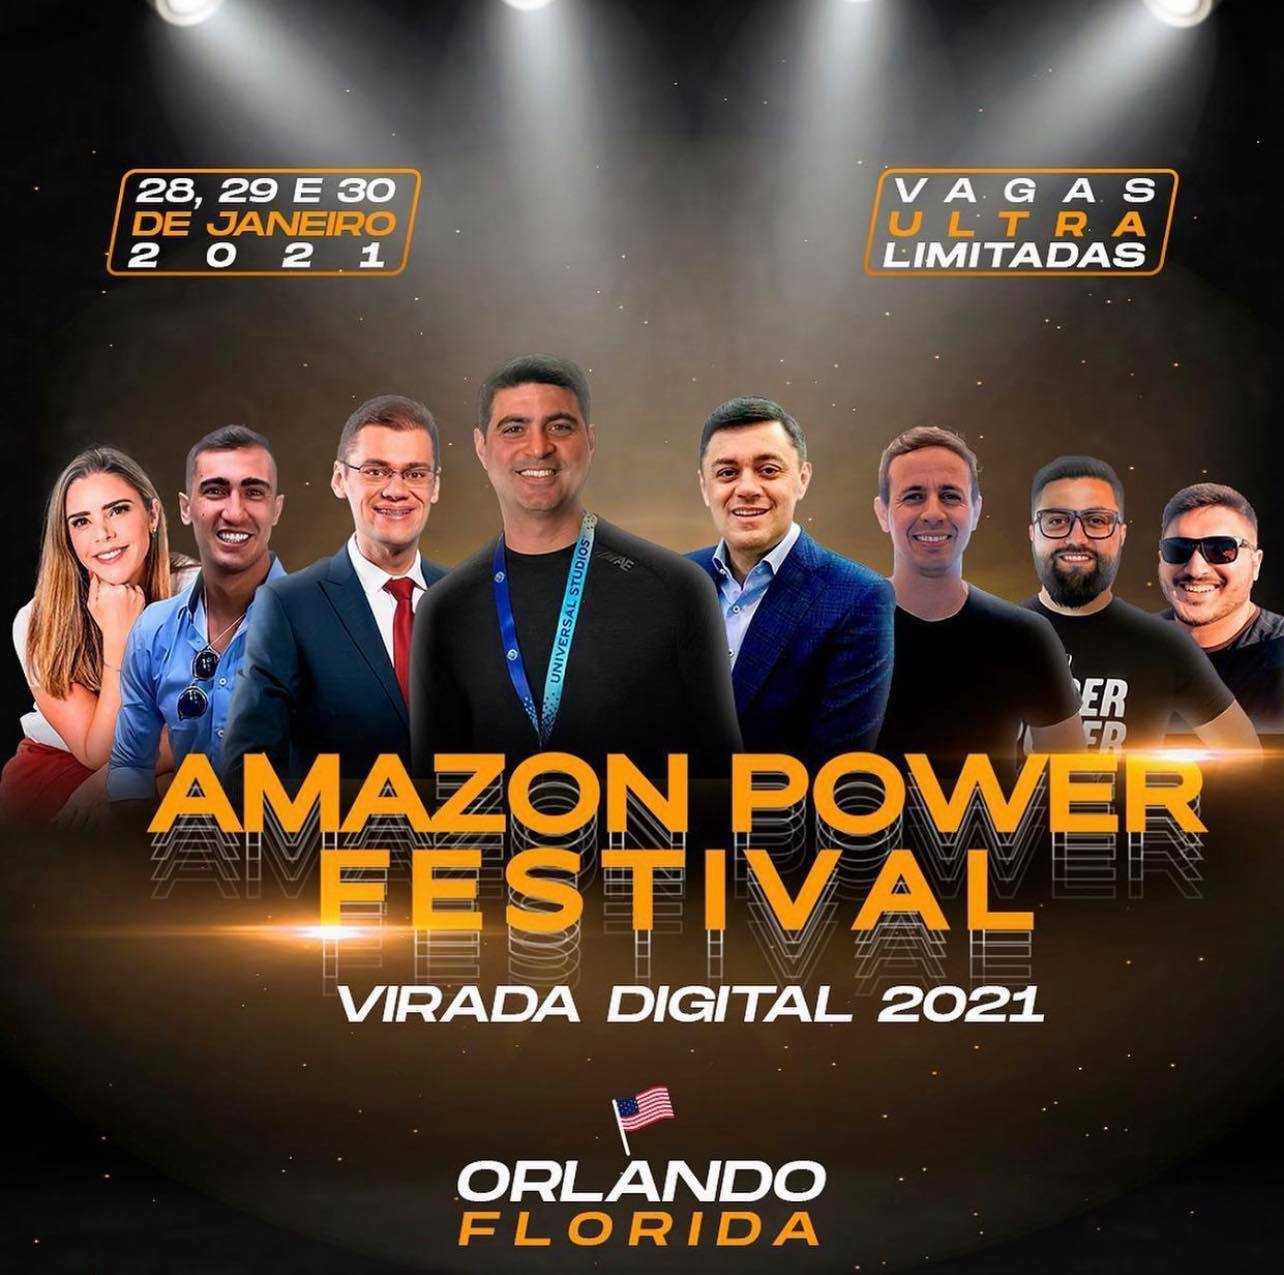 Amazon Power Festival asinzen